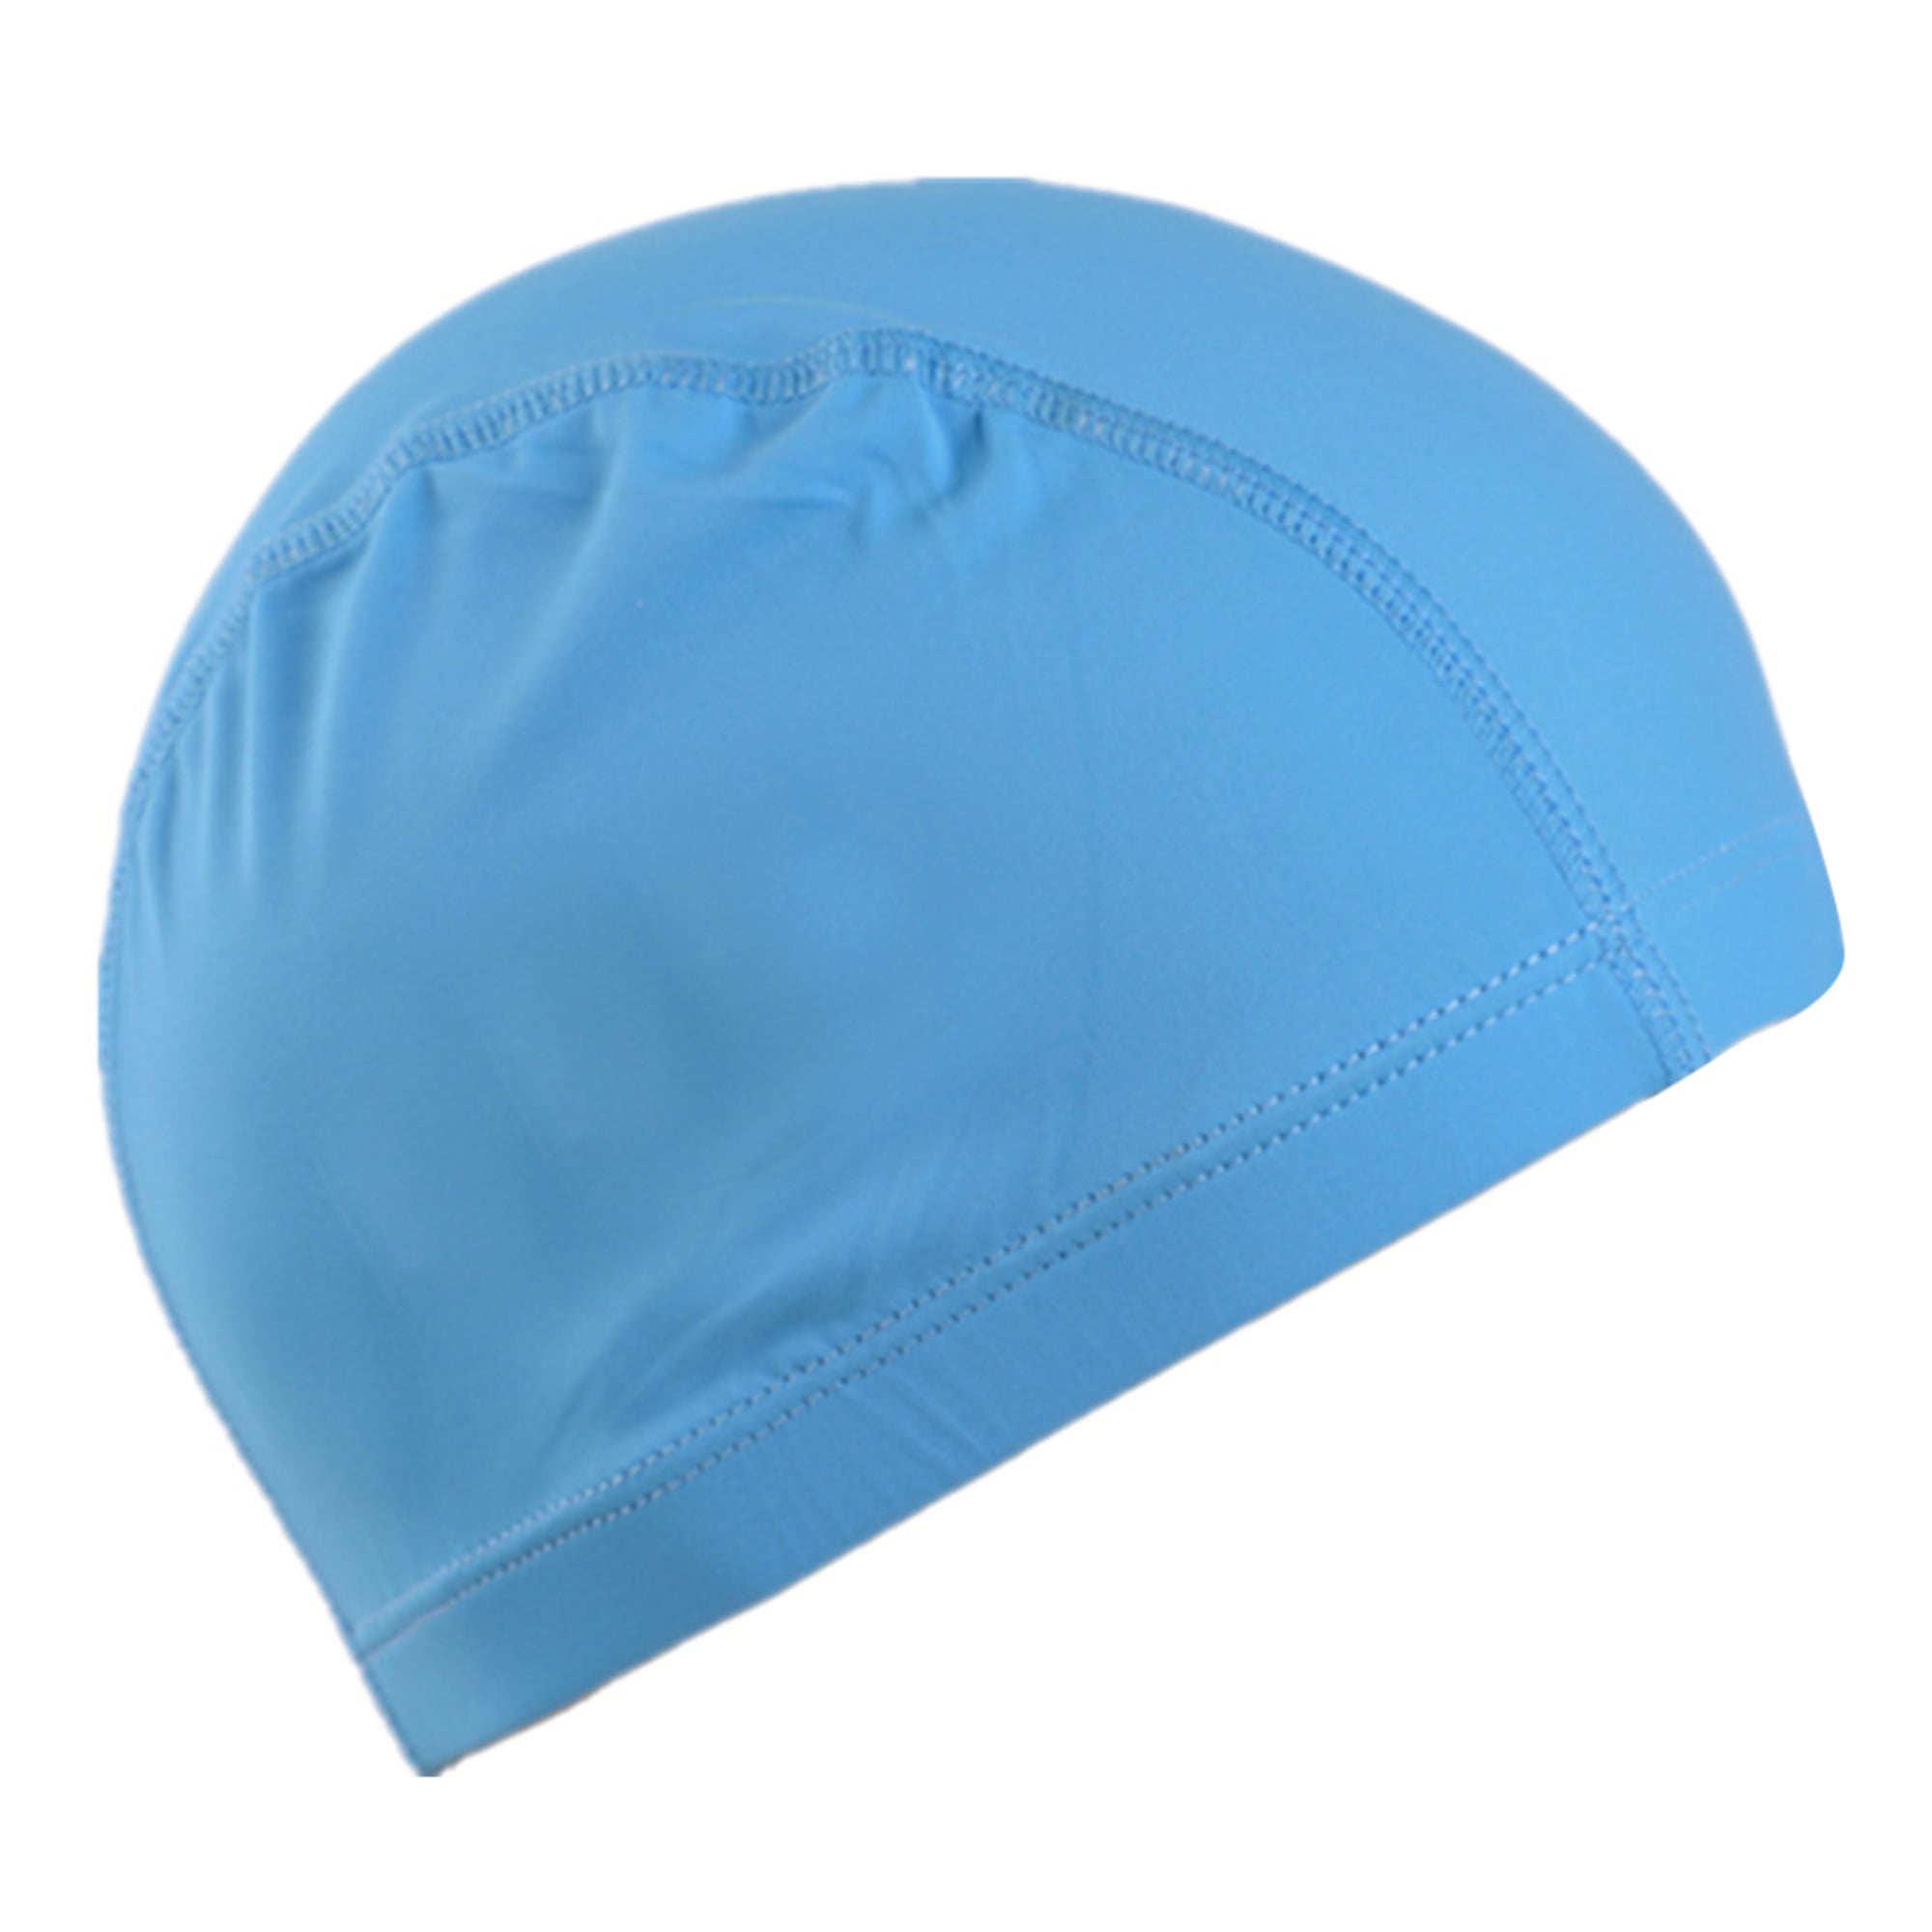 Unisex Adults Kids Swimming Diving Pool Beach Head Caps Stretchy Comfy Swim Hats 